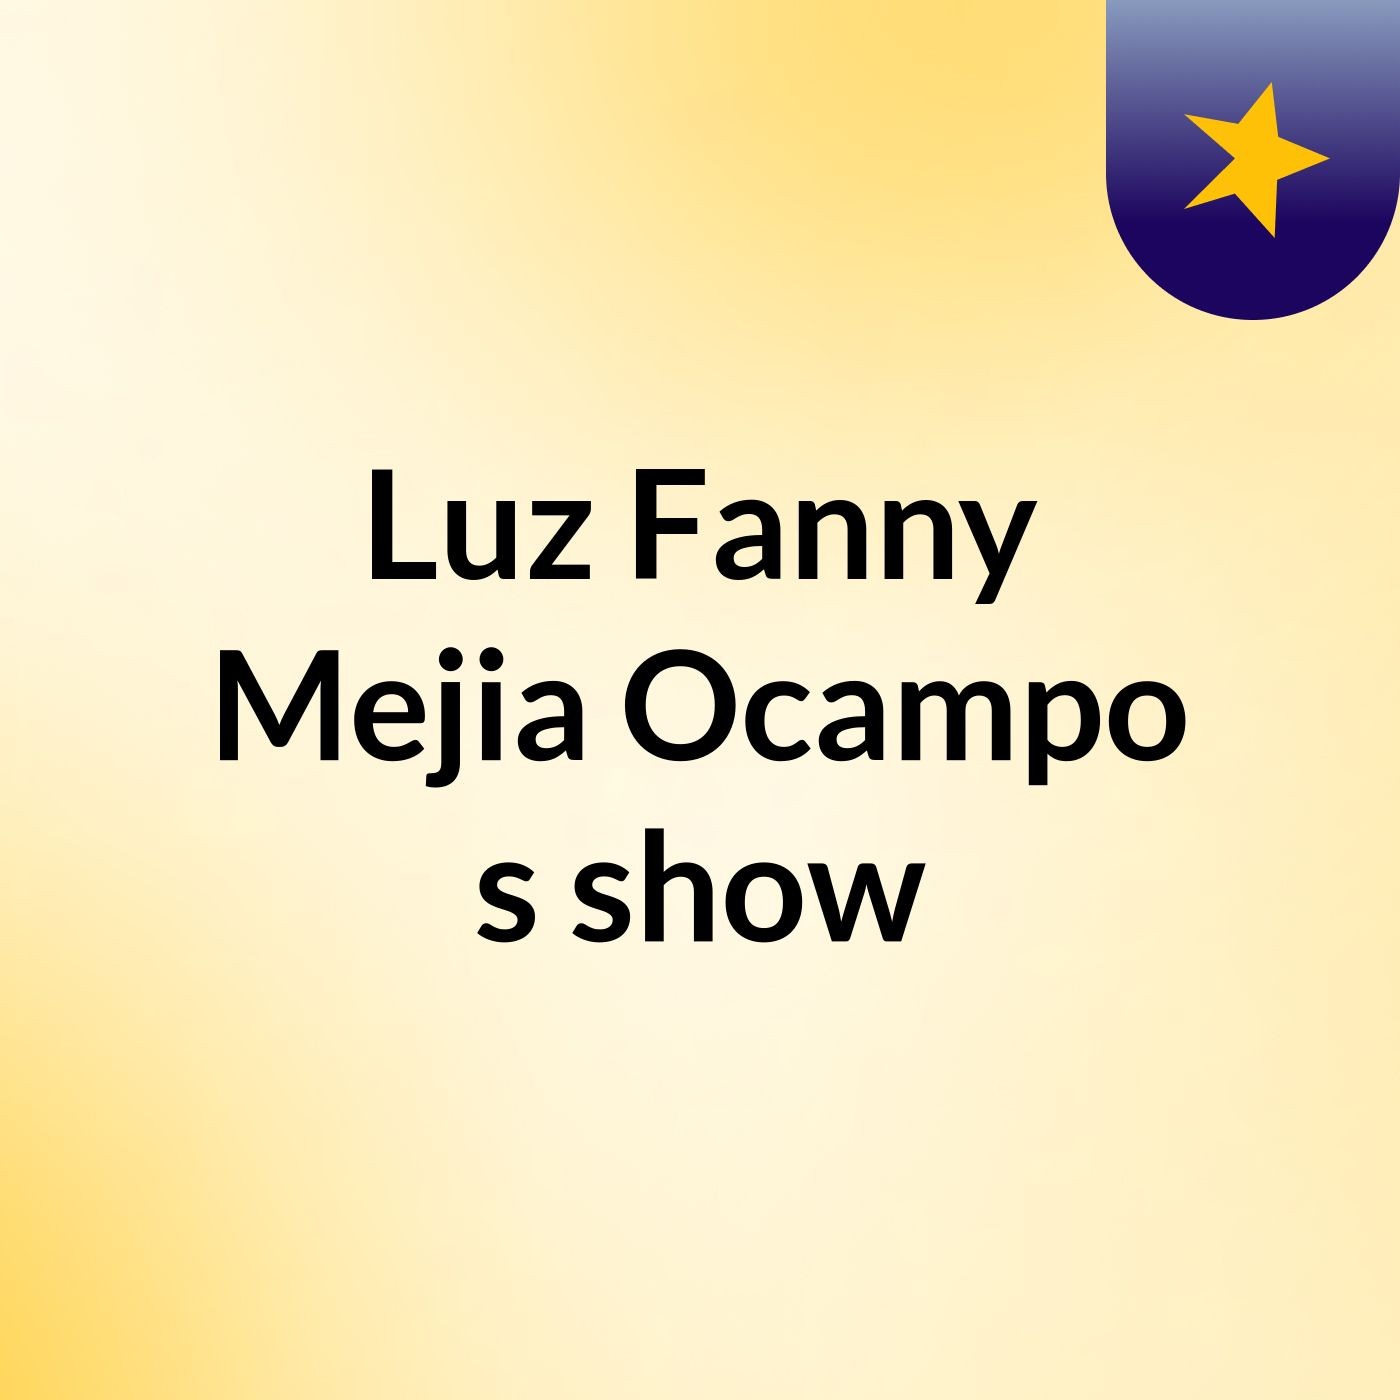 Luz Fanny Mejia Ocampo's show